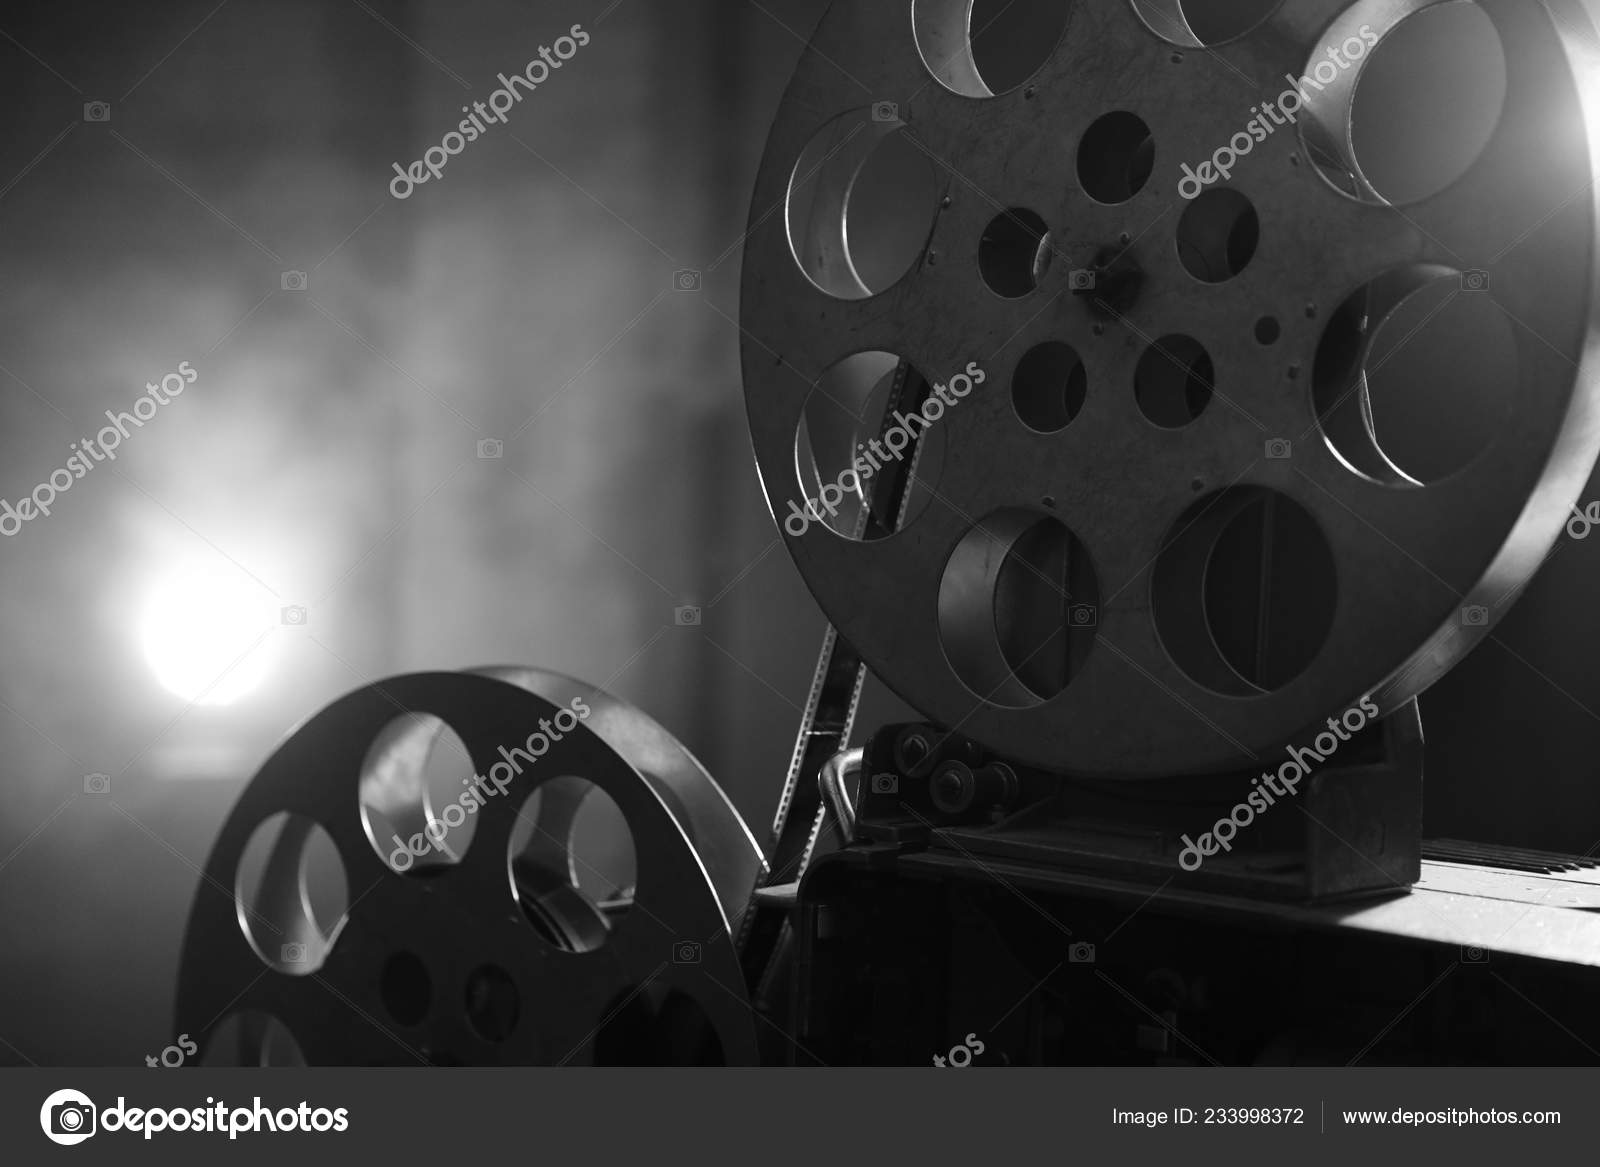 https://st4.depositphotos.com/2896569/23399/i/1600/depositphotos_233998372-stock-photo-vintage-movie-projector-film-reels.jpg